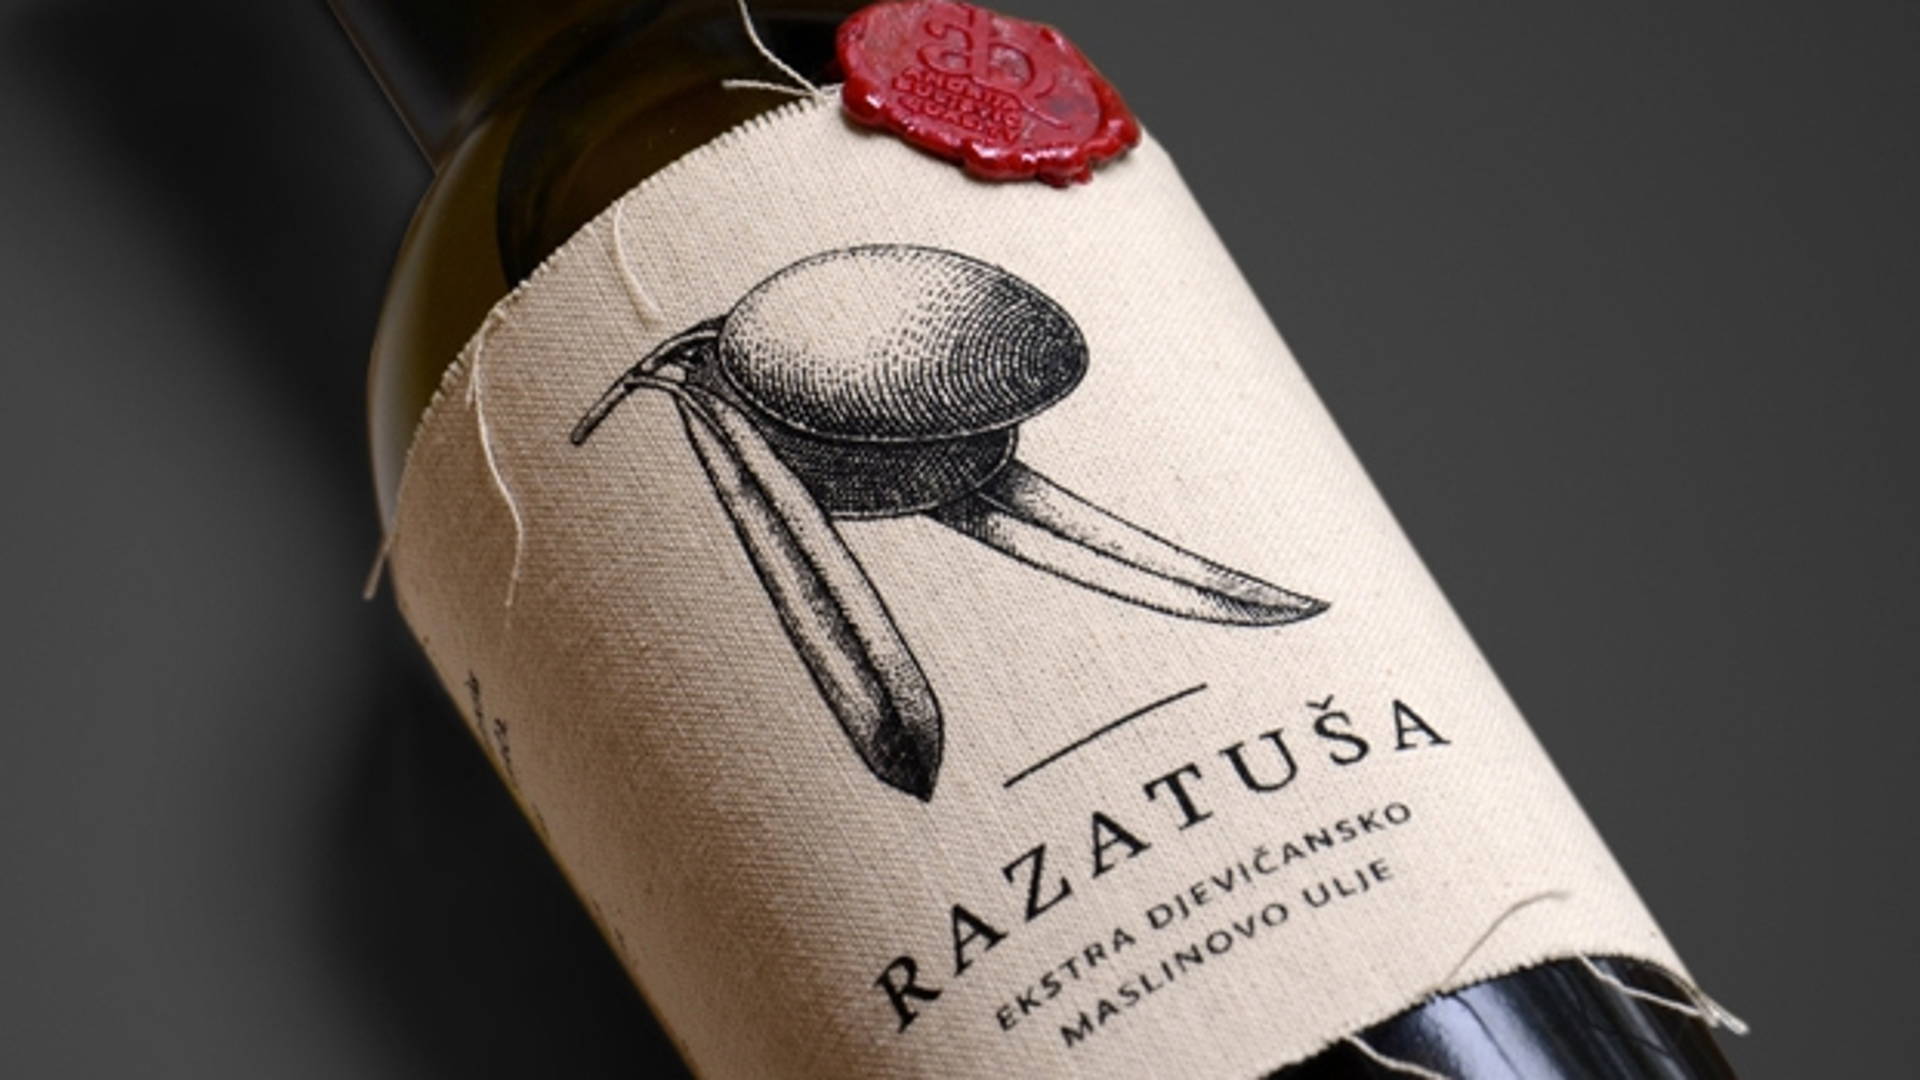 Featured image for Razatusa Olive Oil